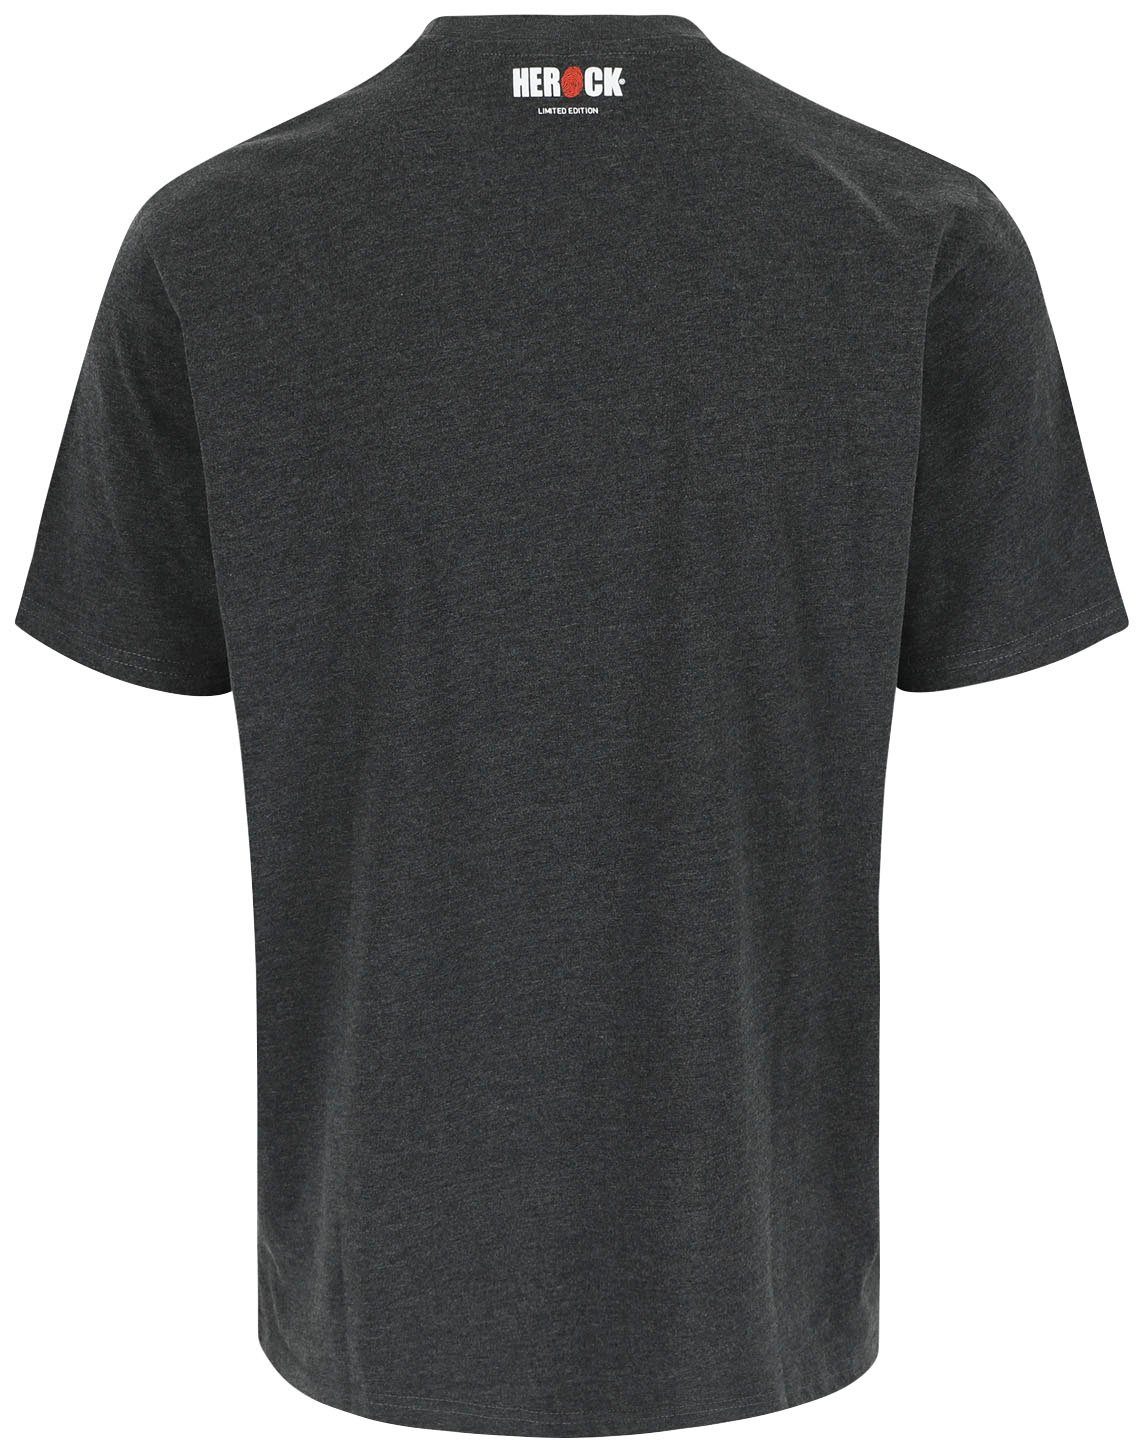 Herock T-Shirt Limited Edition Maximus